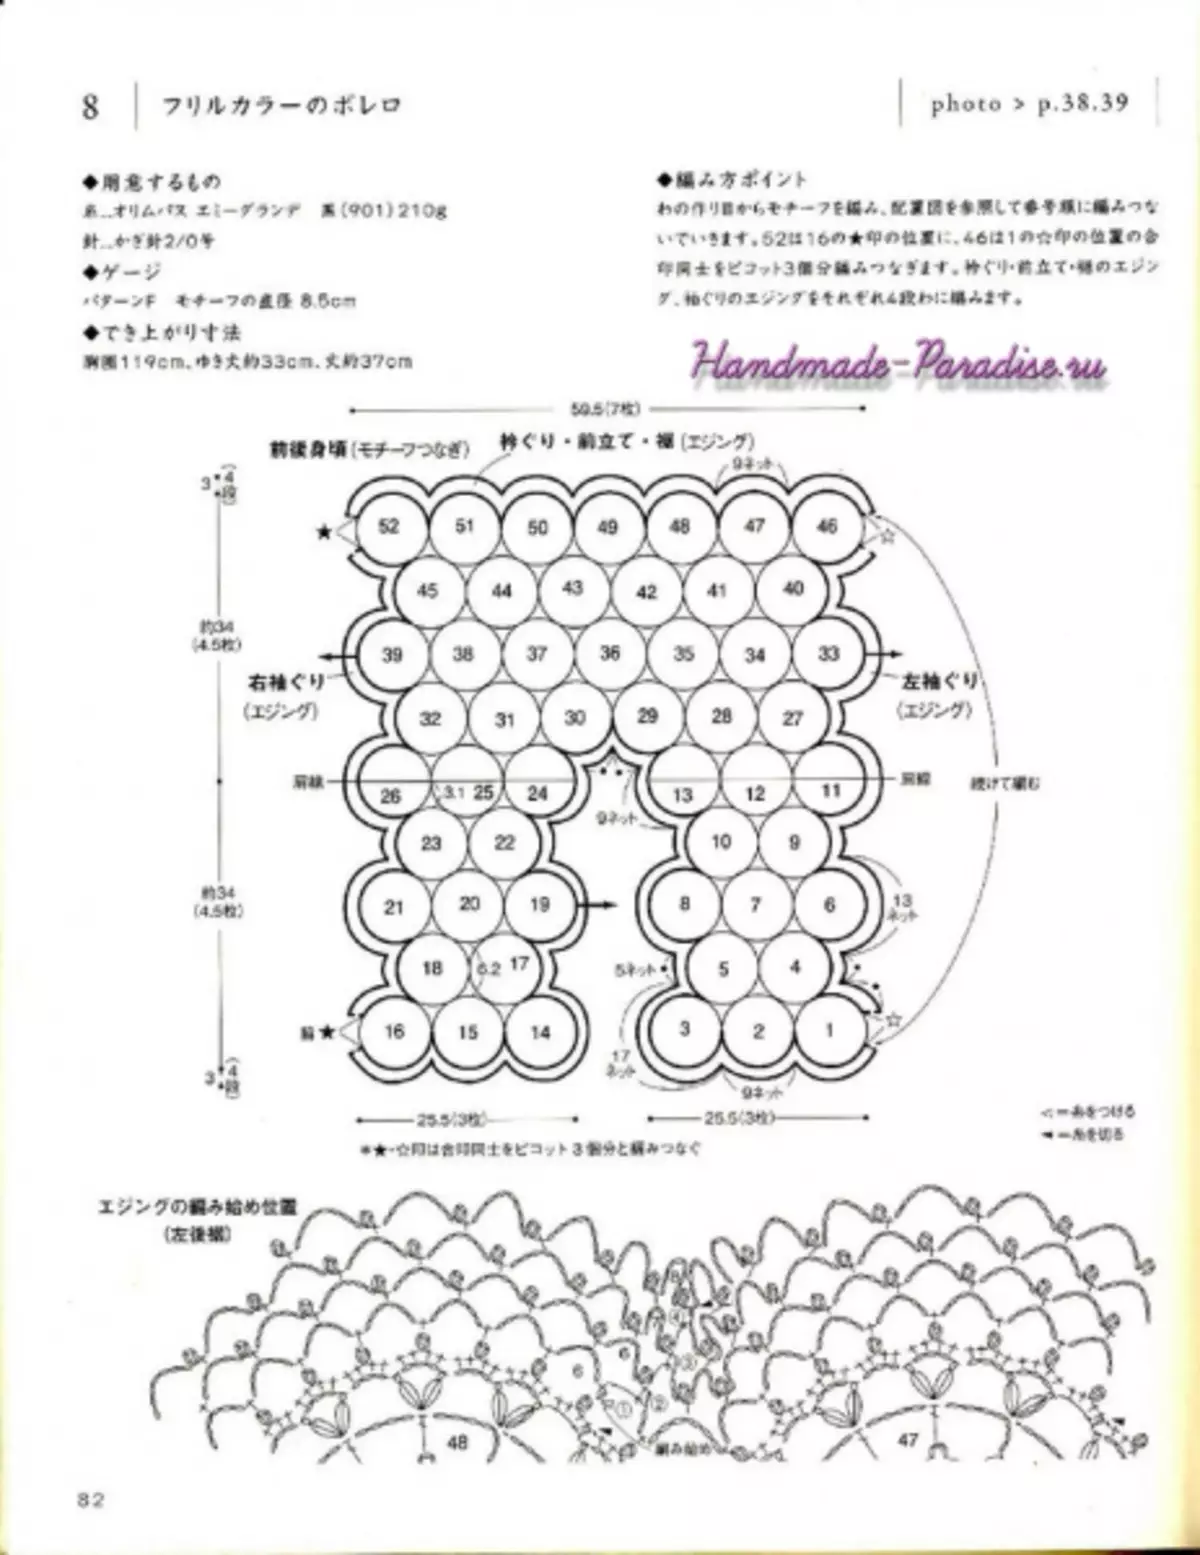 Crochet decorativo. Revista japonesa